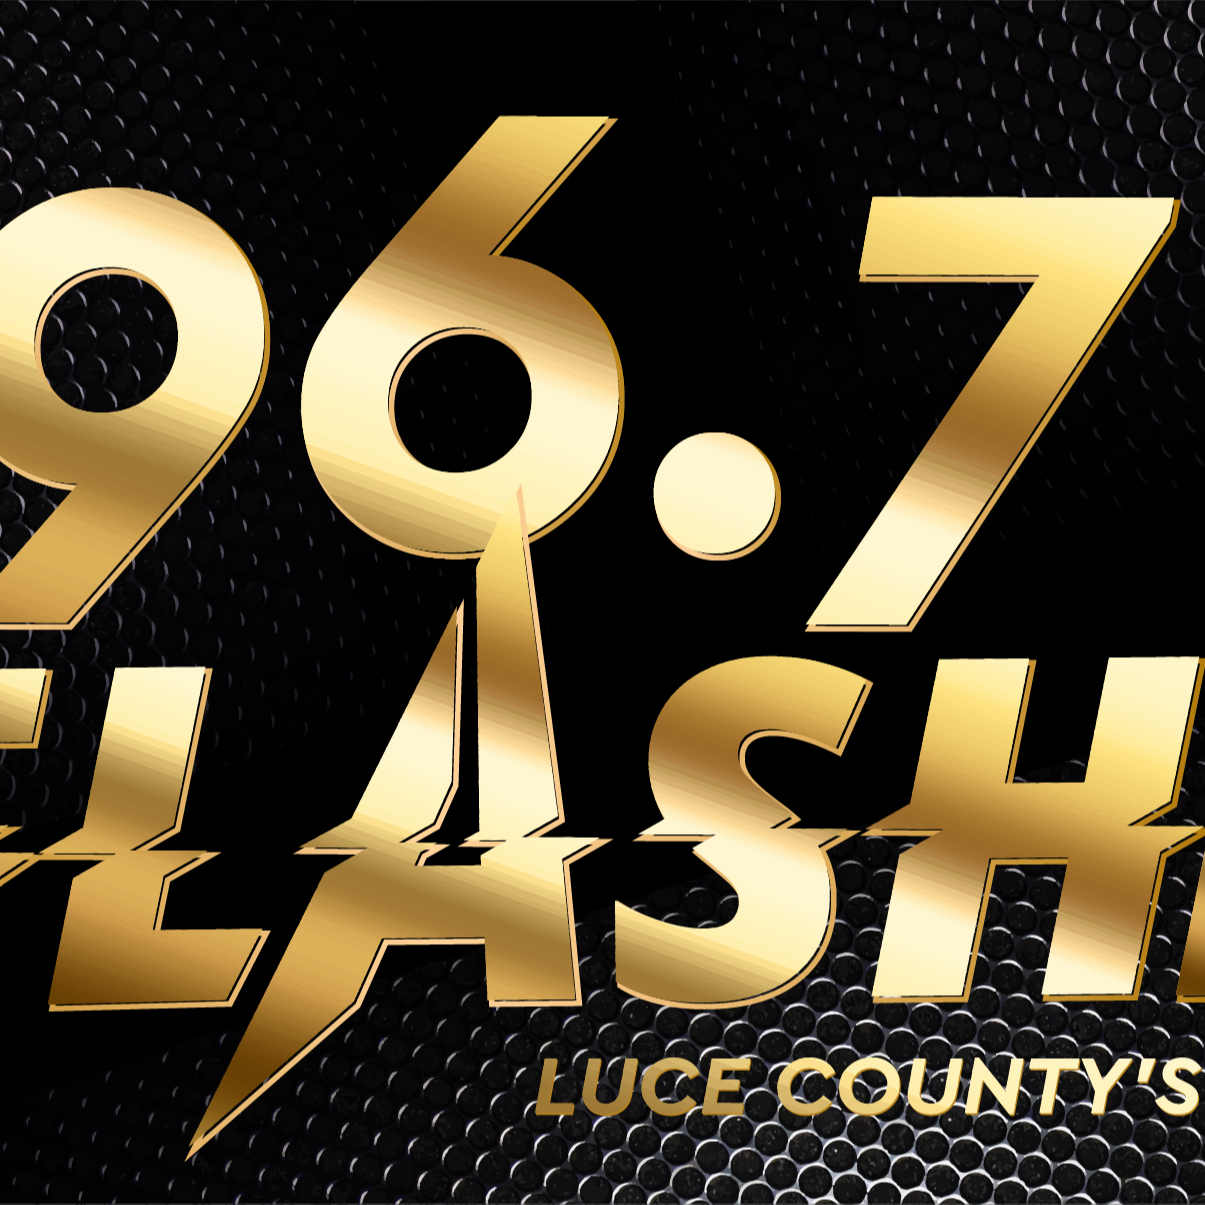 96.7 Flash FM - Luce County's Rock